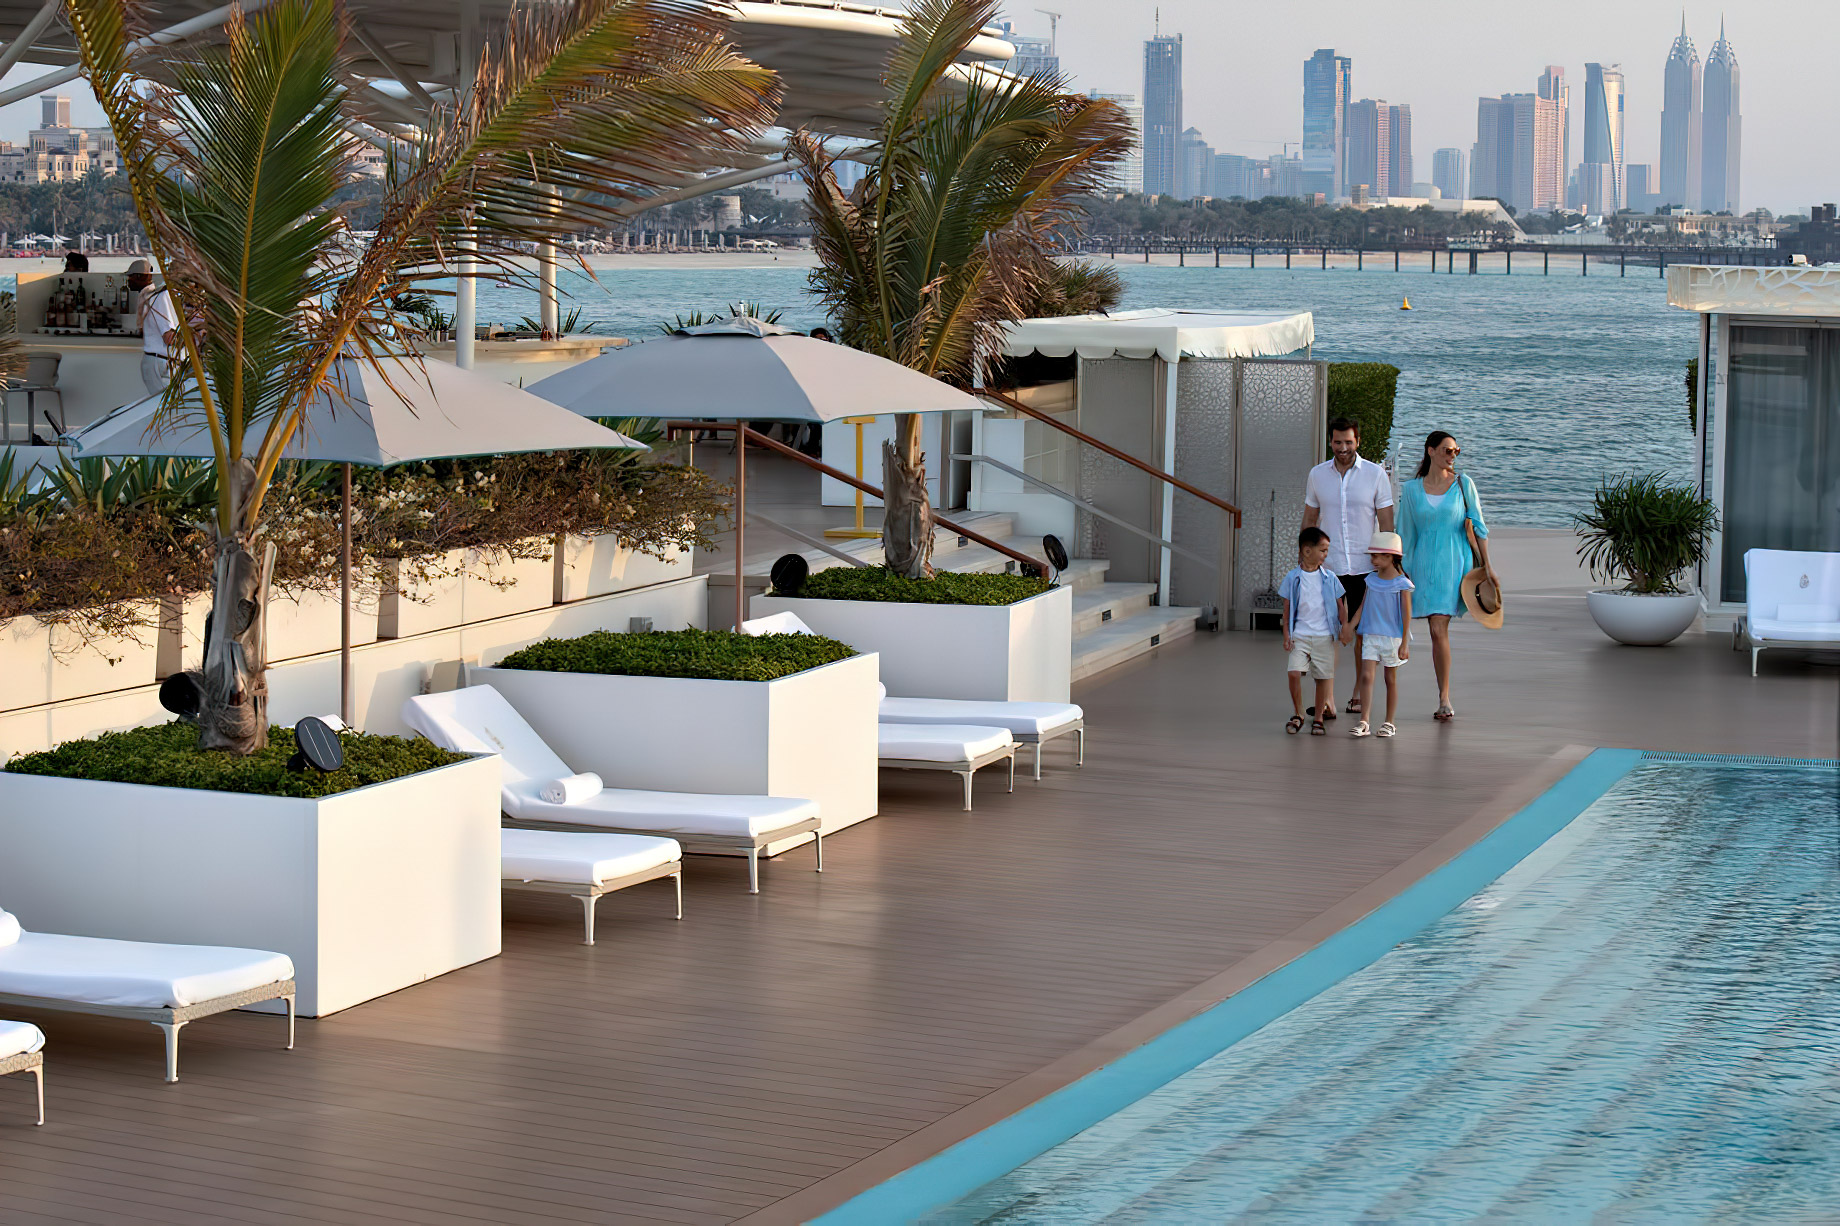 Burj Al Arab Jumeirah Hotel - Dubai, UAE - Burj Al Arab Terrace Poolside